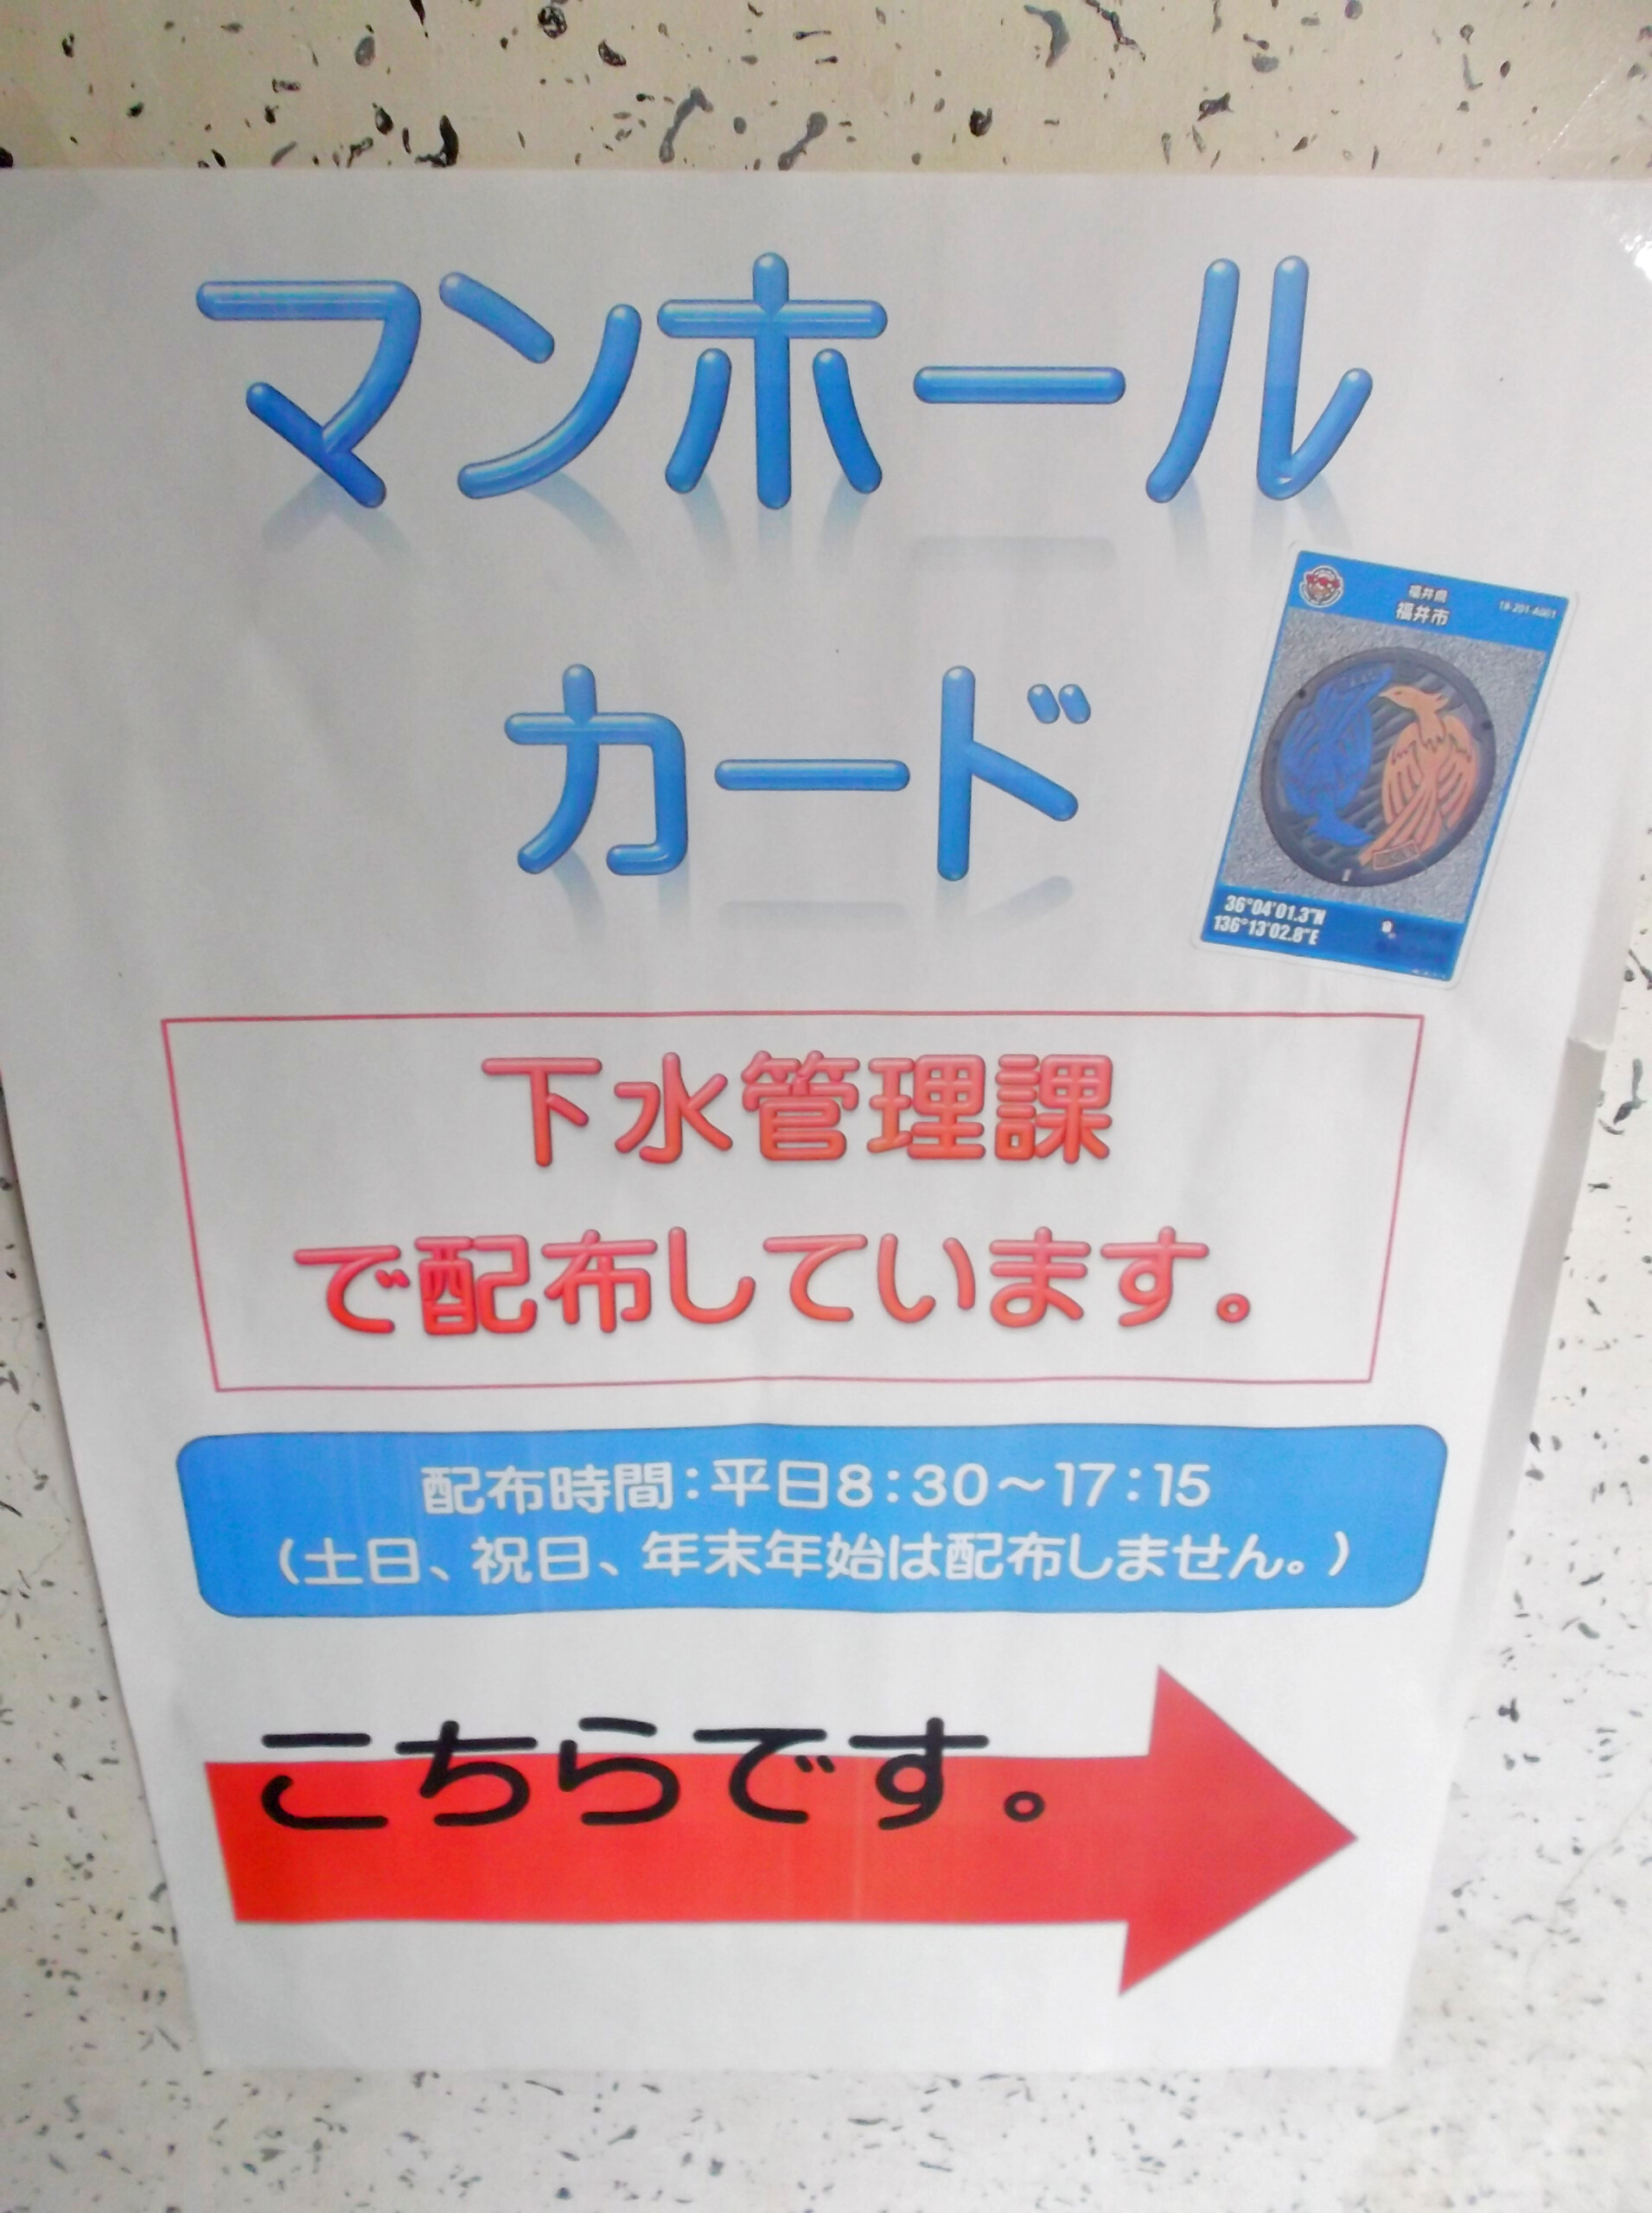 Manhole Card Sign at Fukui City Hall